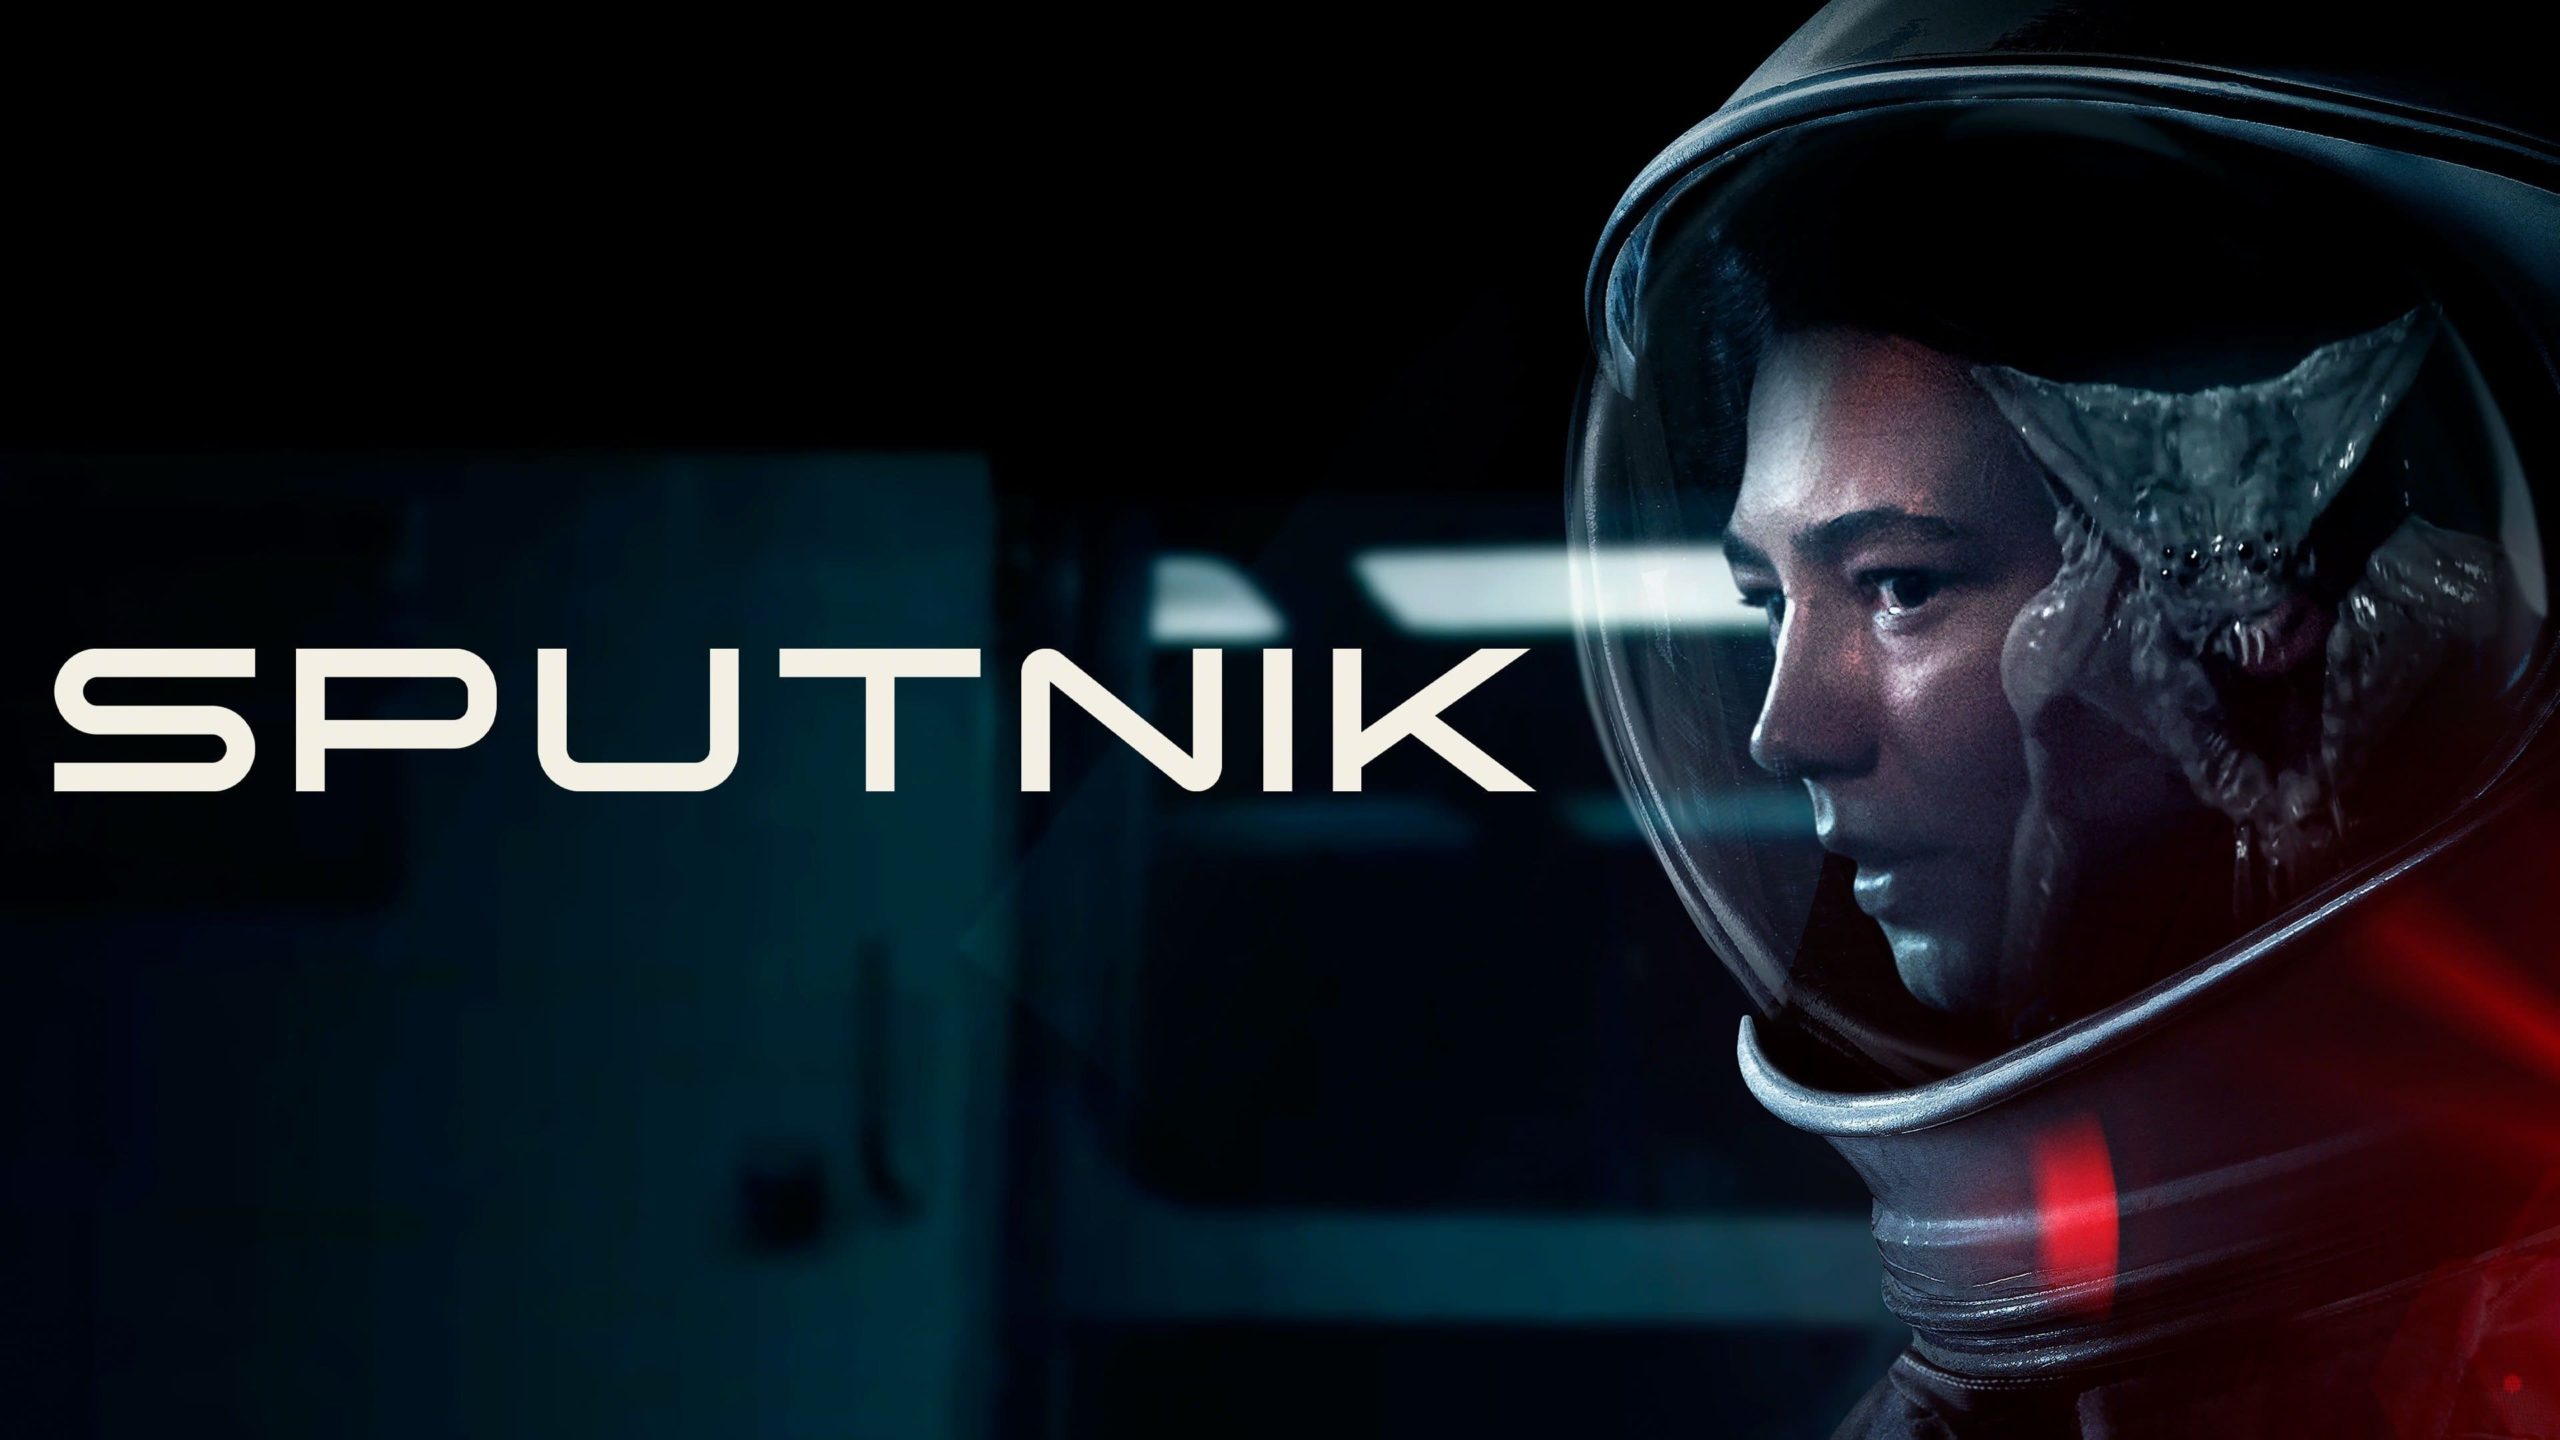 Imágenes de la película "Sputnik"